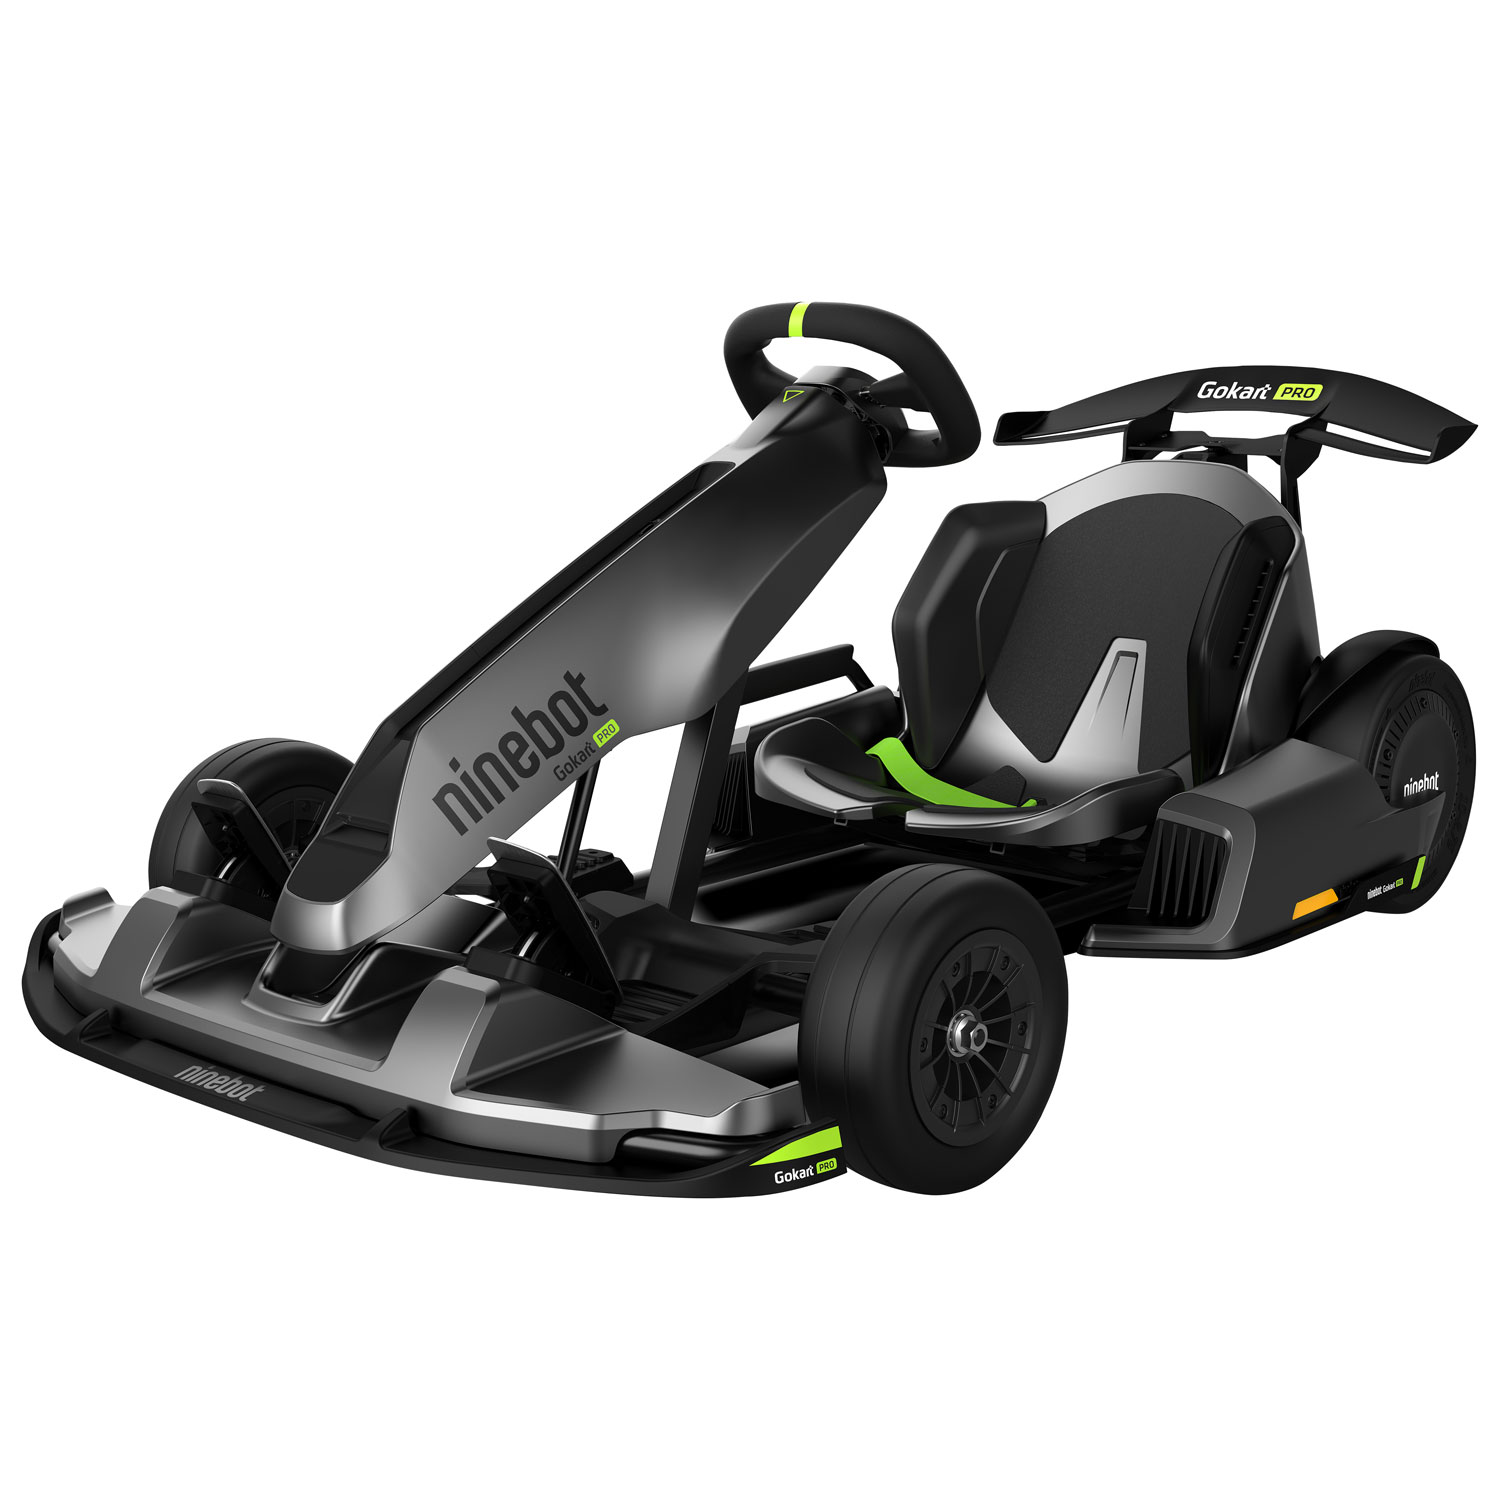 Segway Ninebot Gokart Pro Electric Go Kart (25km Max Range / 37km/h Top Speed) - Grey/Black